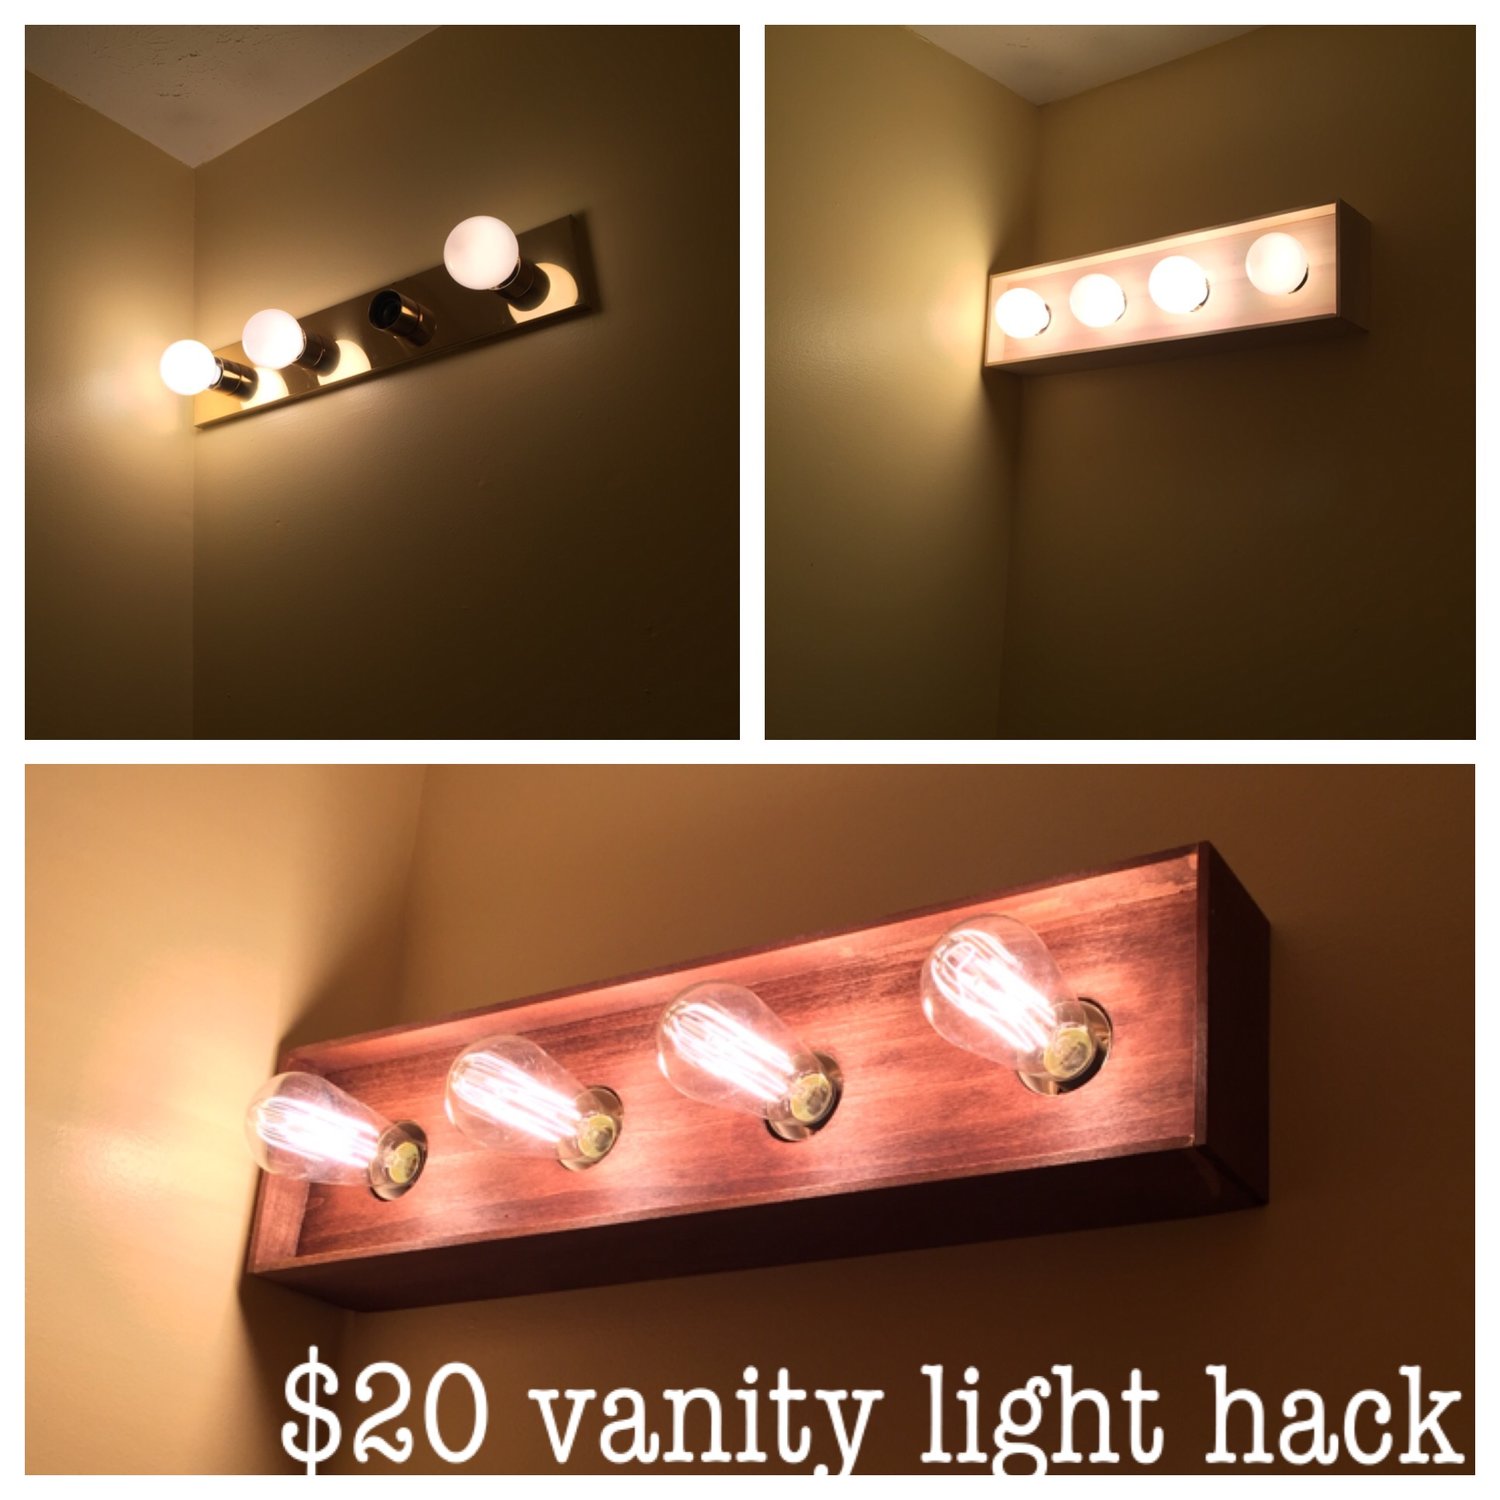 Diy Bathroom Vanity Light Project, Vanity Light Cover